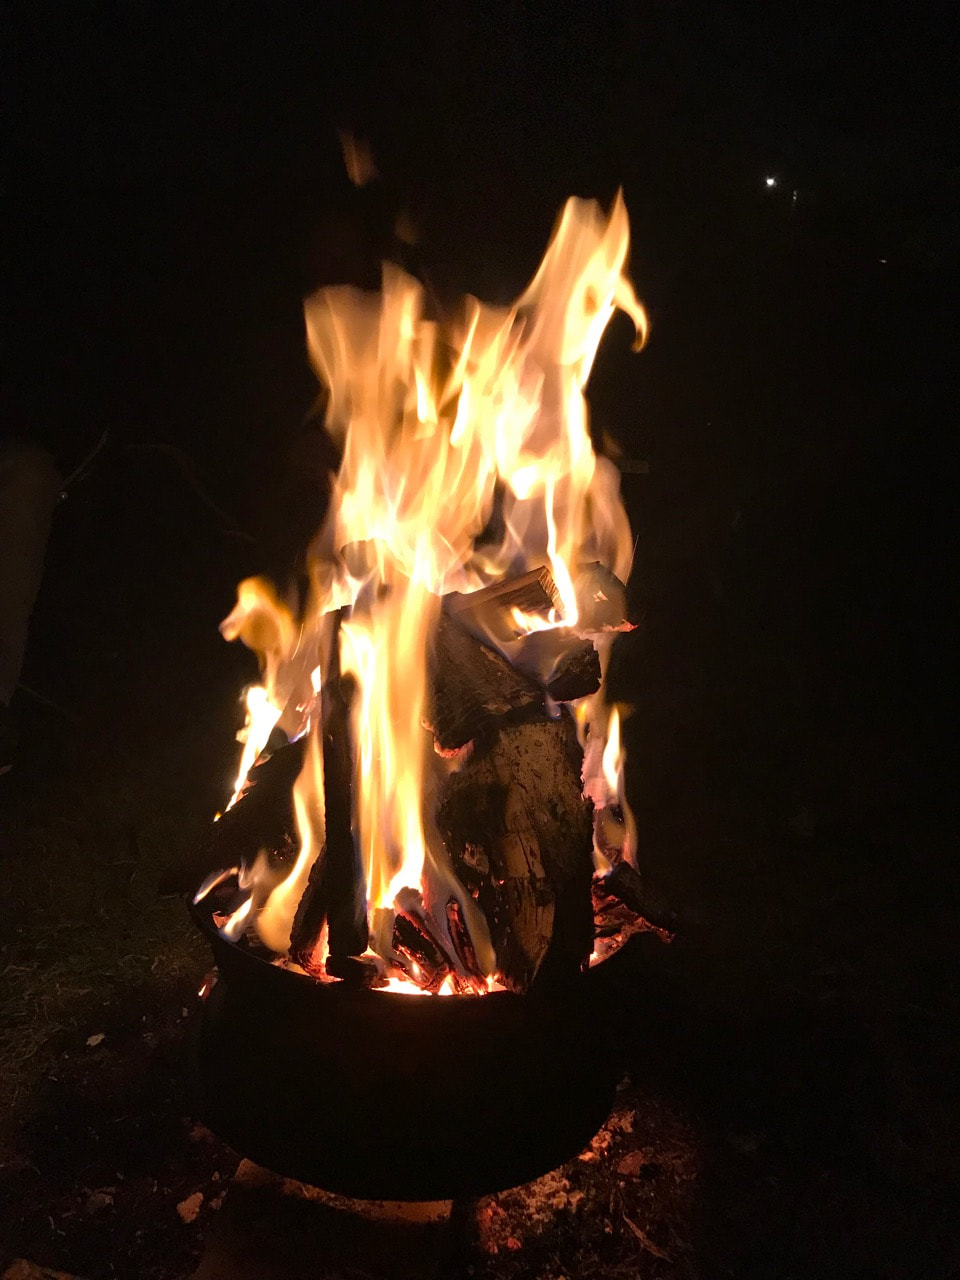 The campfire at the Penzance Kayak Fishing Meet 2018